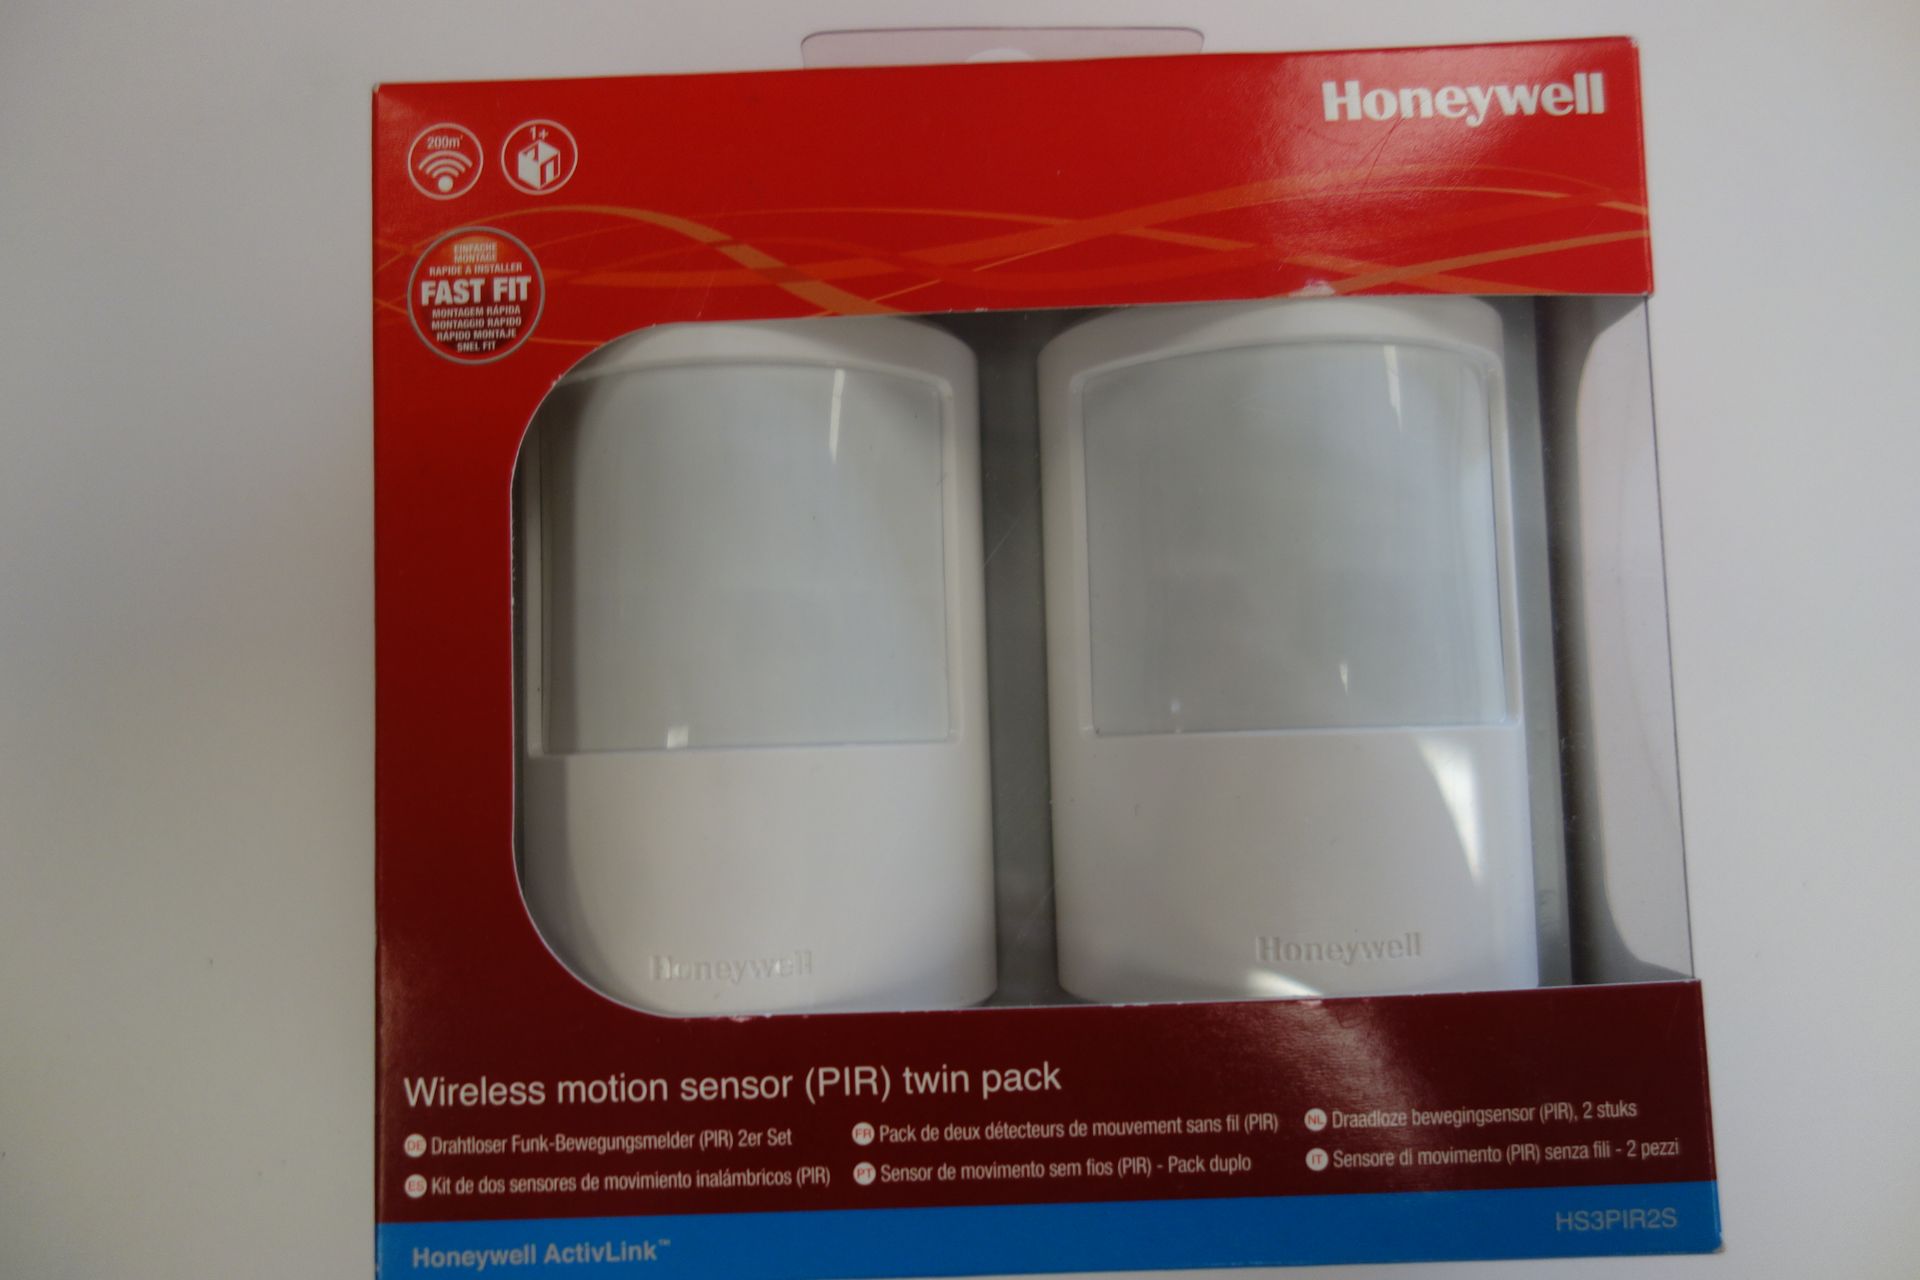 8 X Honeywell H53PIR25 Wireless Motion Sensor PIR Twin Pack 105 Degres Sensor Area